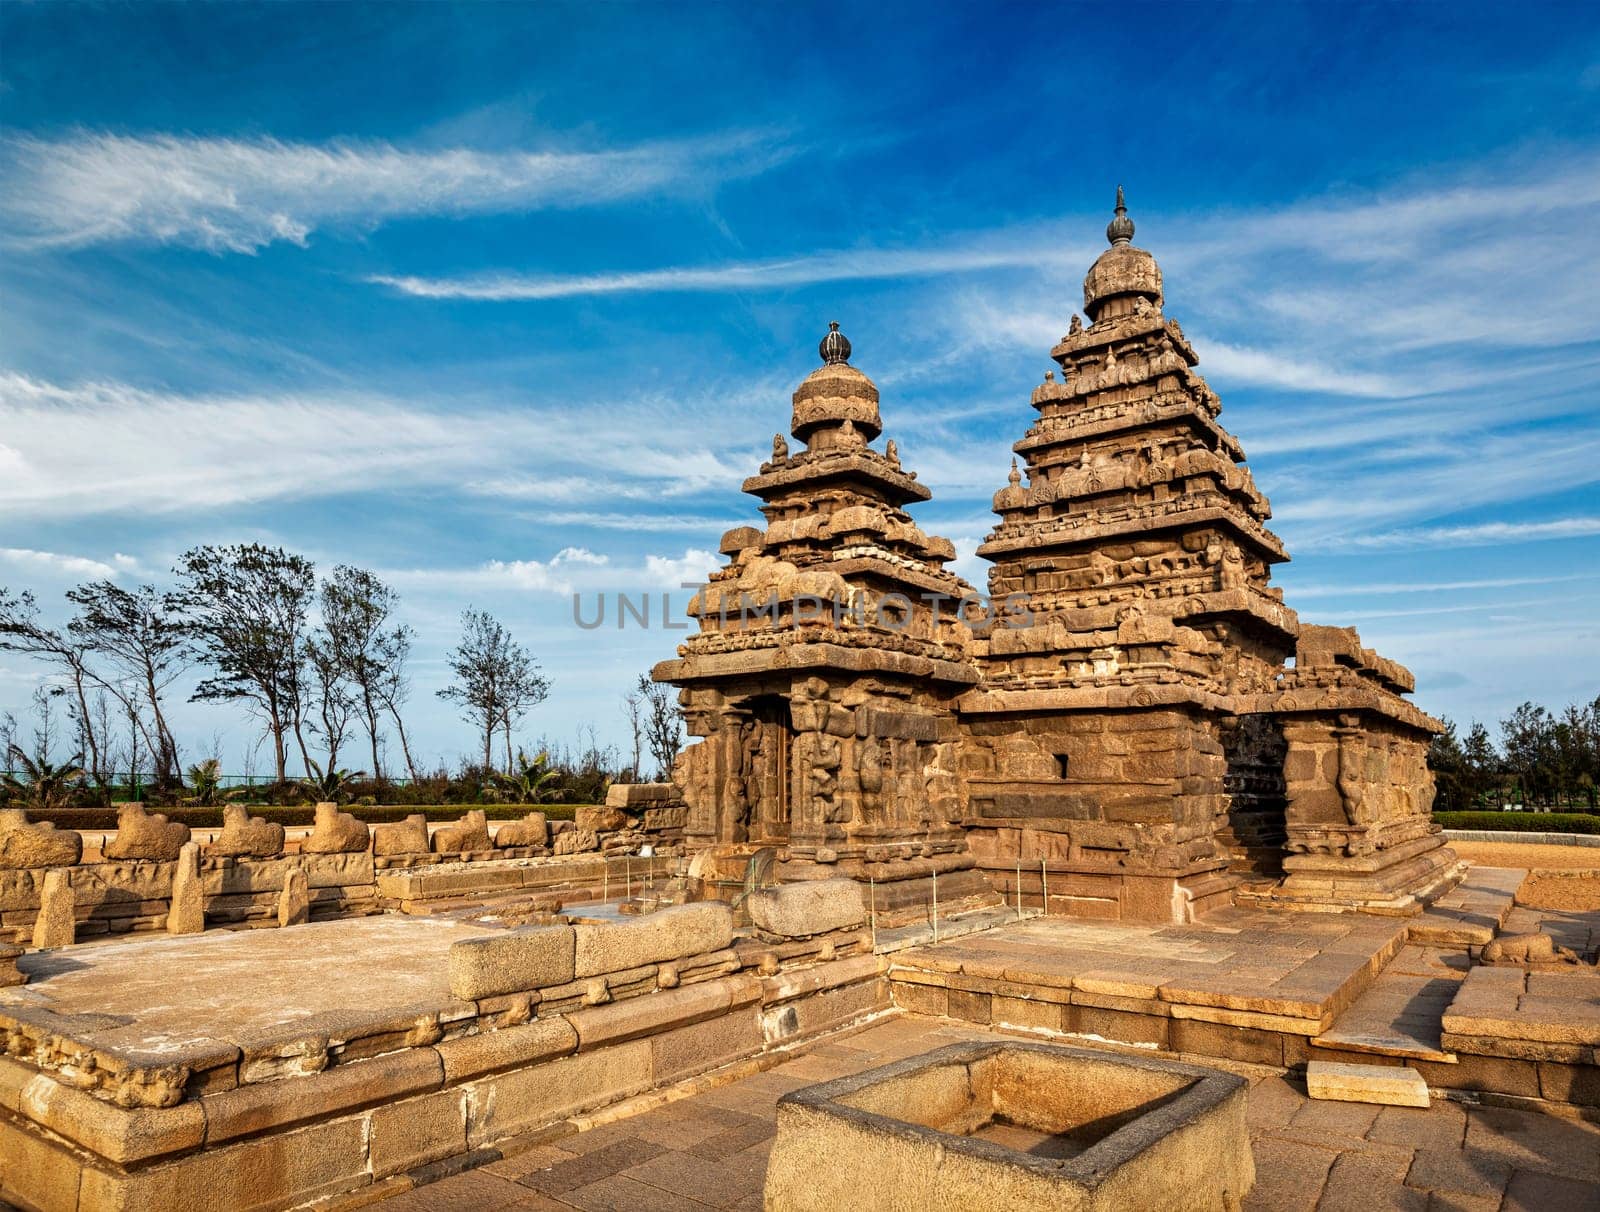 Shore temple - World heritage site in Mahabalipuram, Tamil Nad by dimol